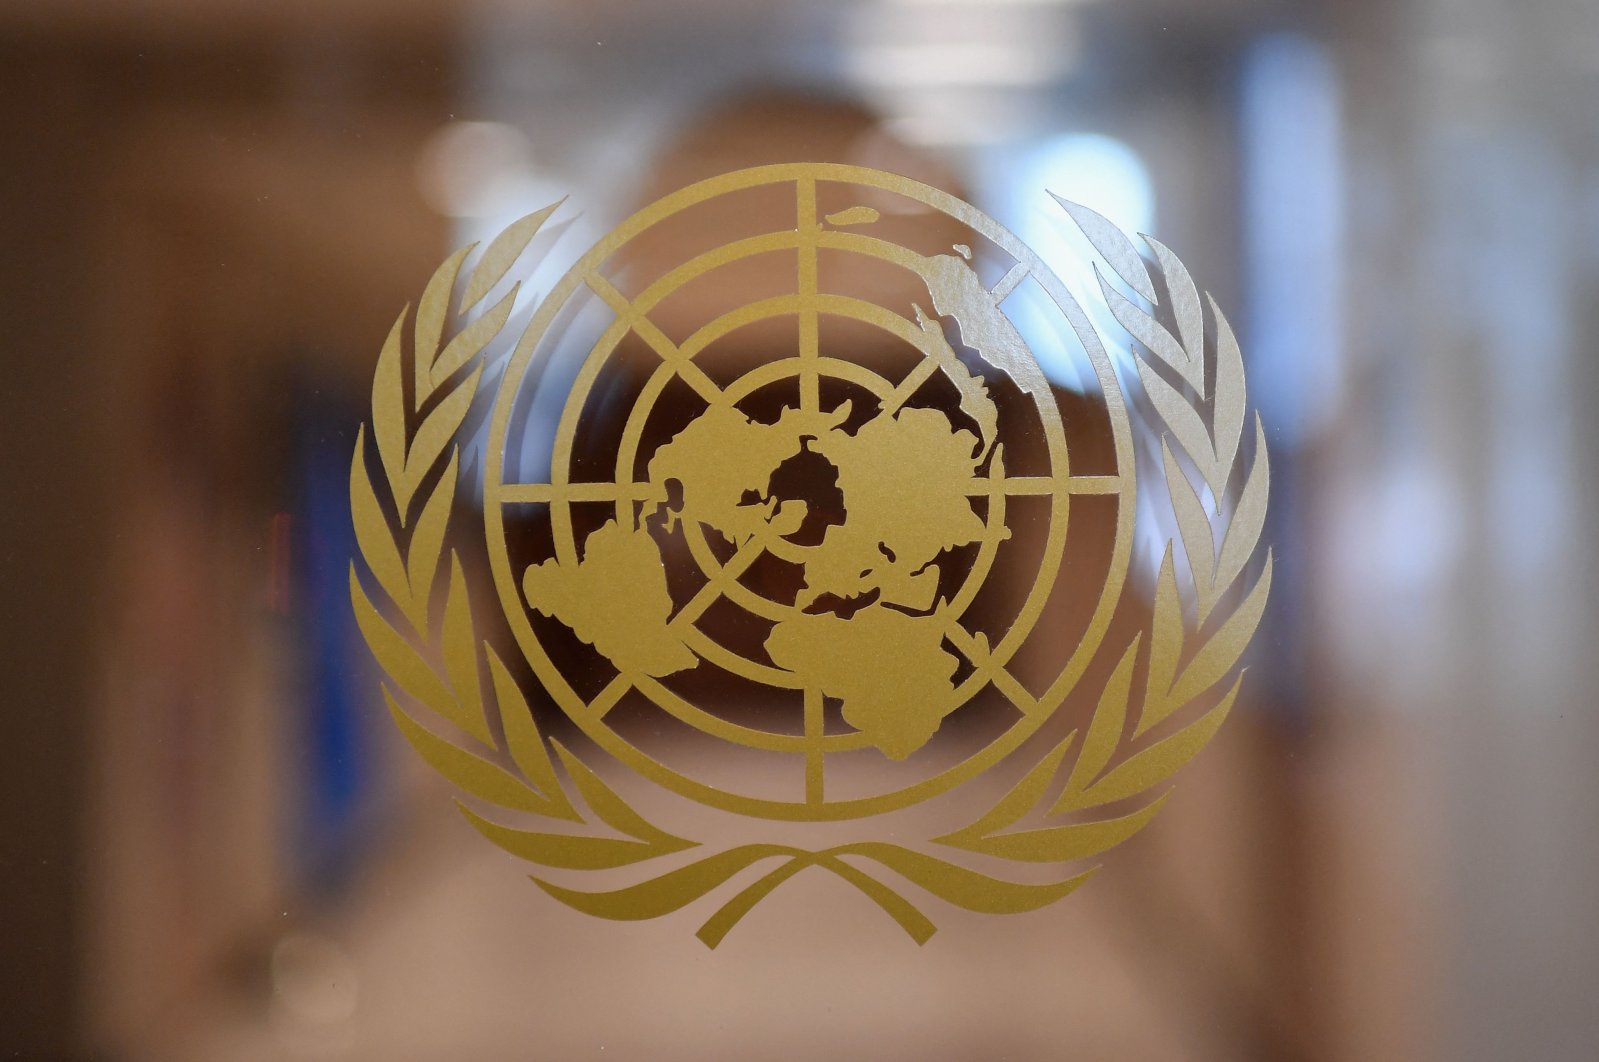 The UN still recognizes Libyan Prime Minister Dbeibah